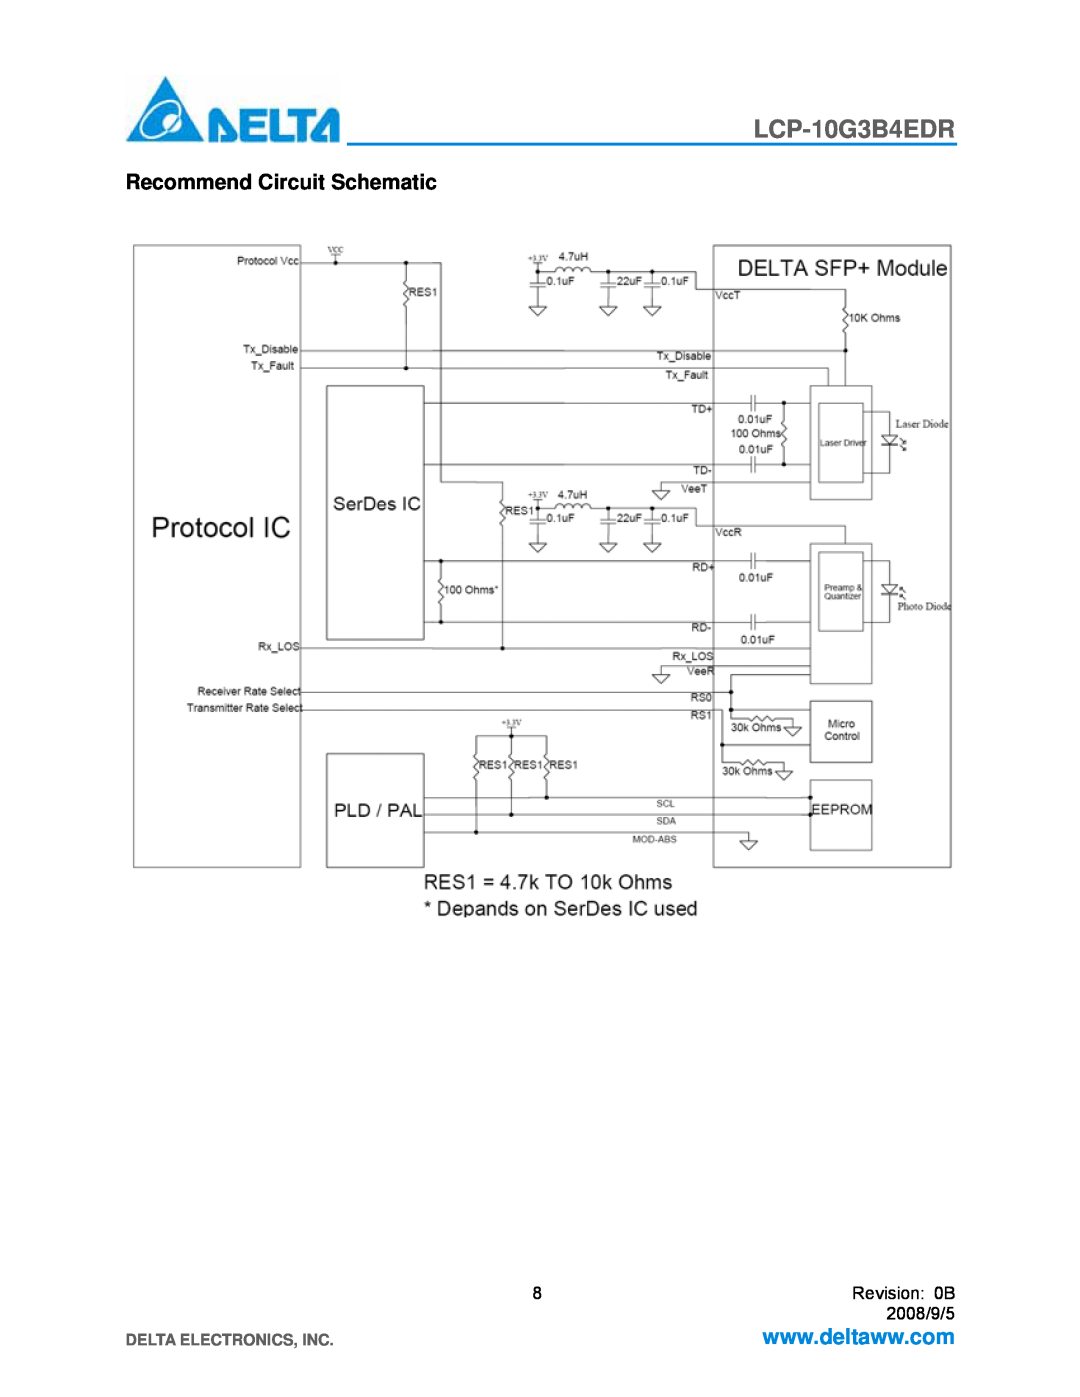 Delta Electronics LCP-10G3B4EDR manual Recommend Circuit Schematic, Delta Electronics, Inc 